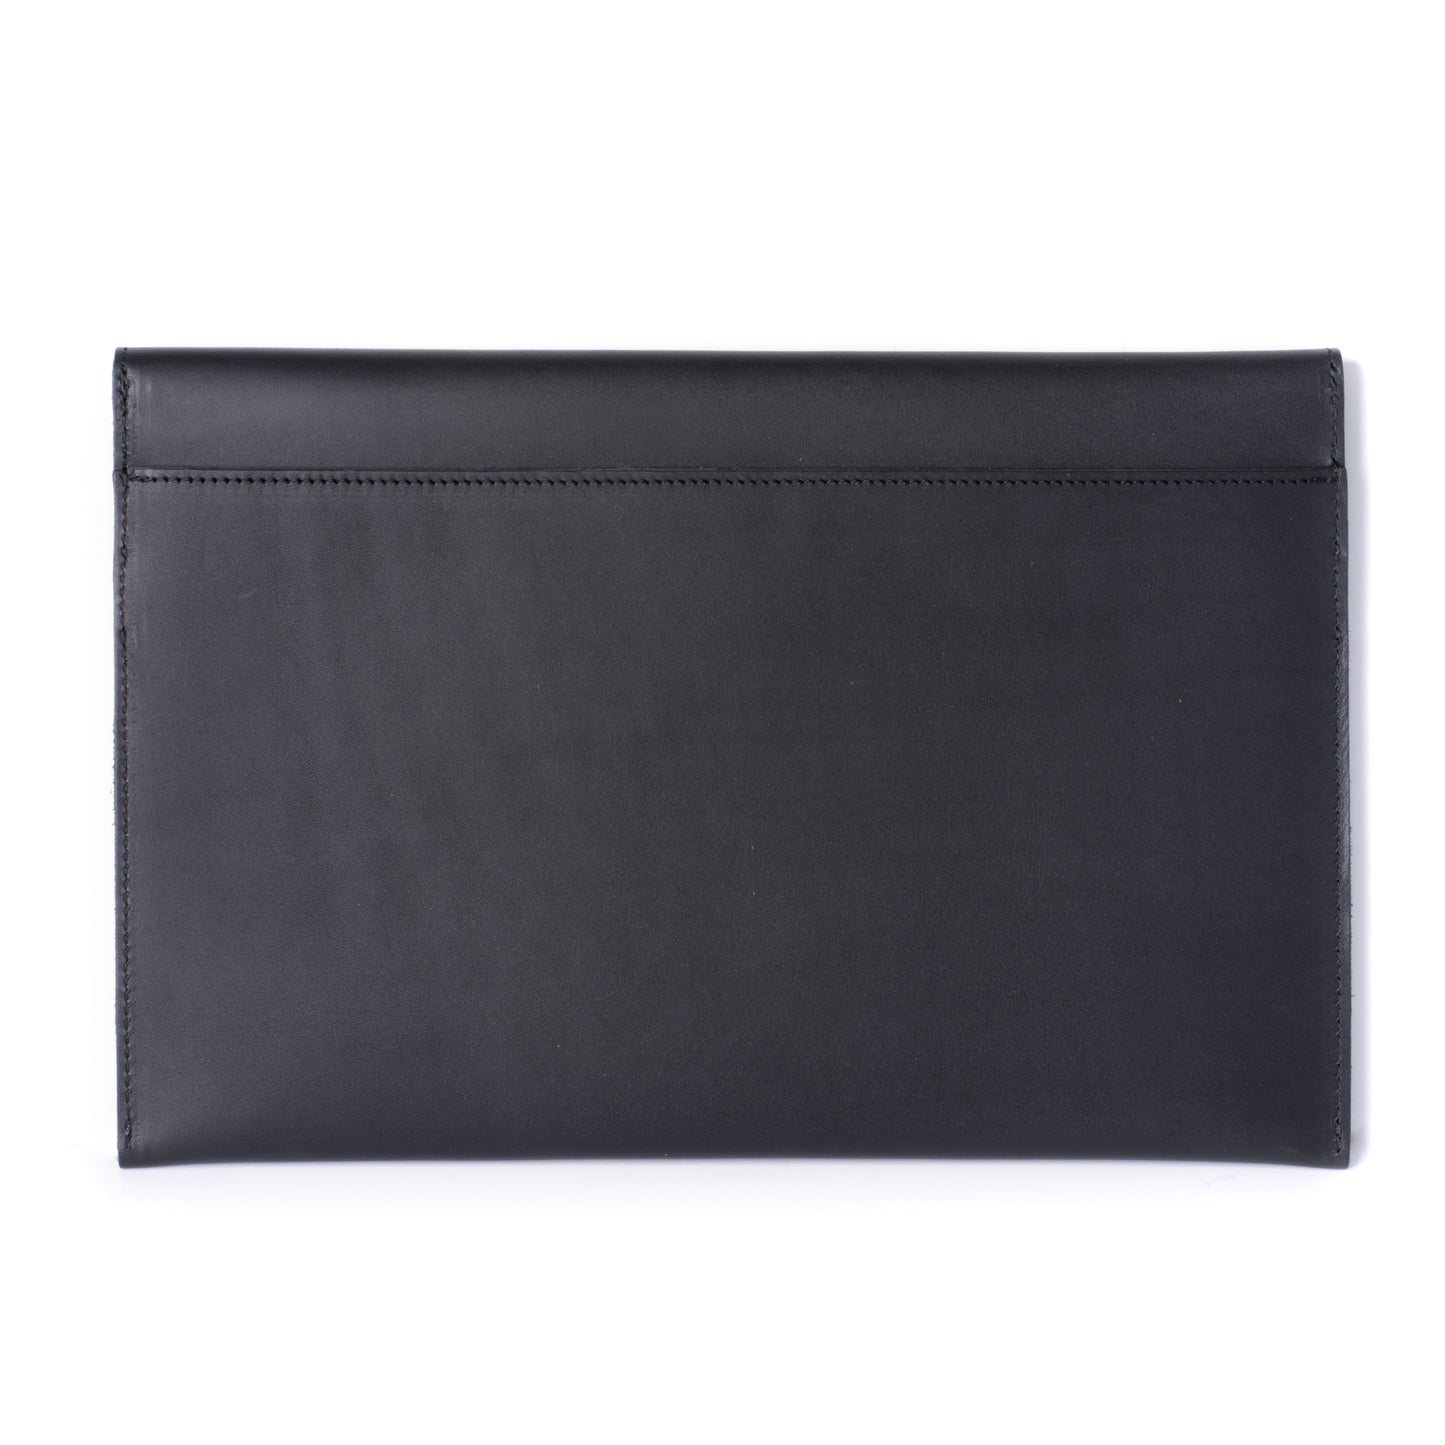 Leather iPad Pro Envelope Case - Midnight